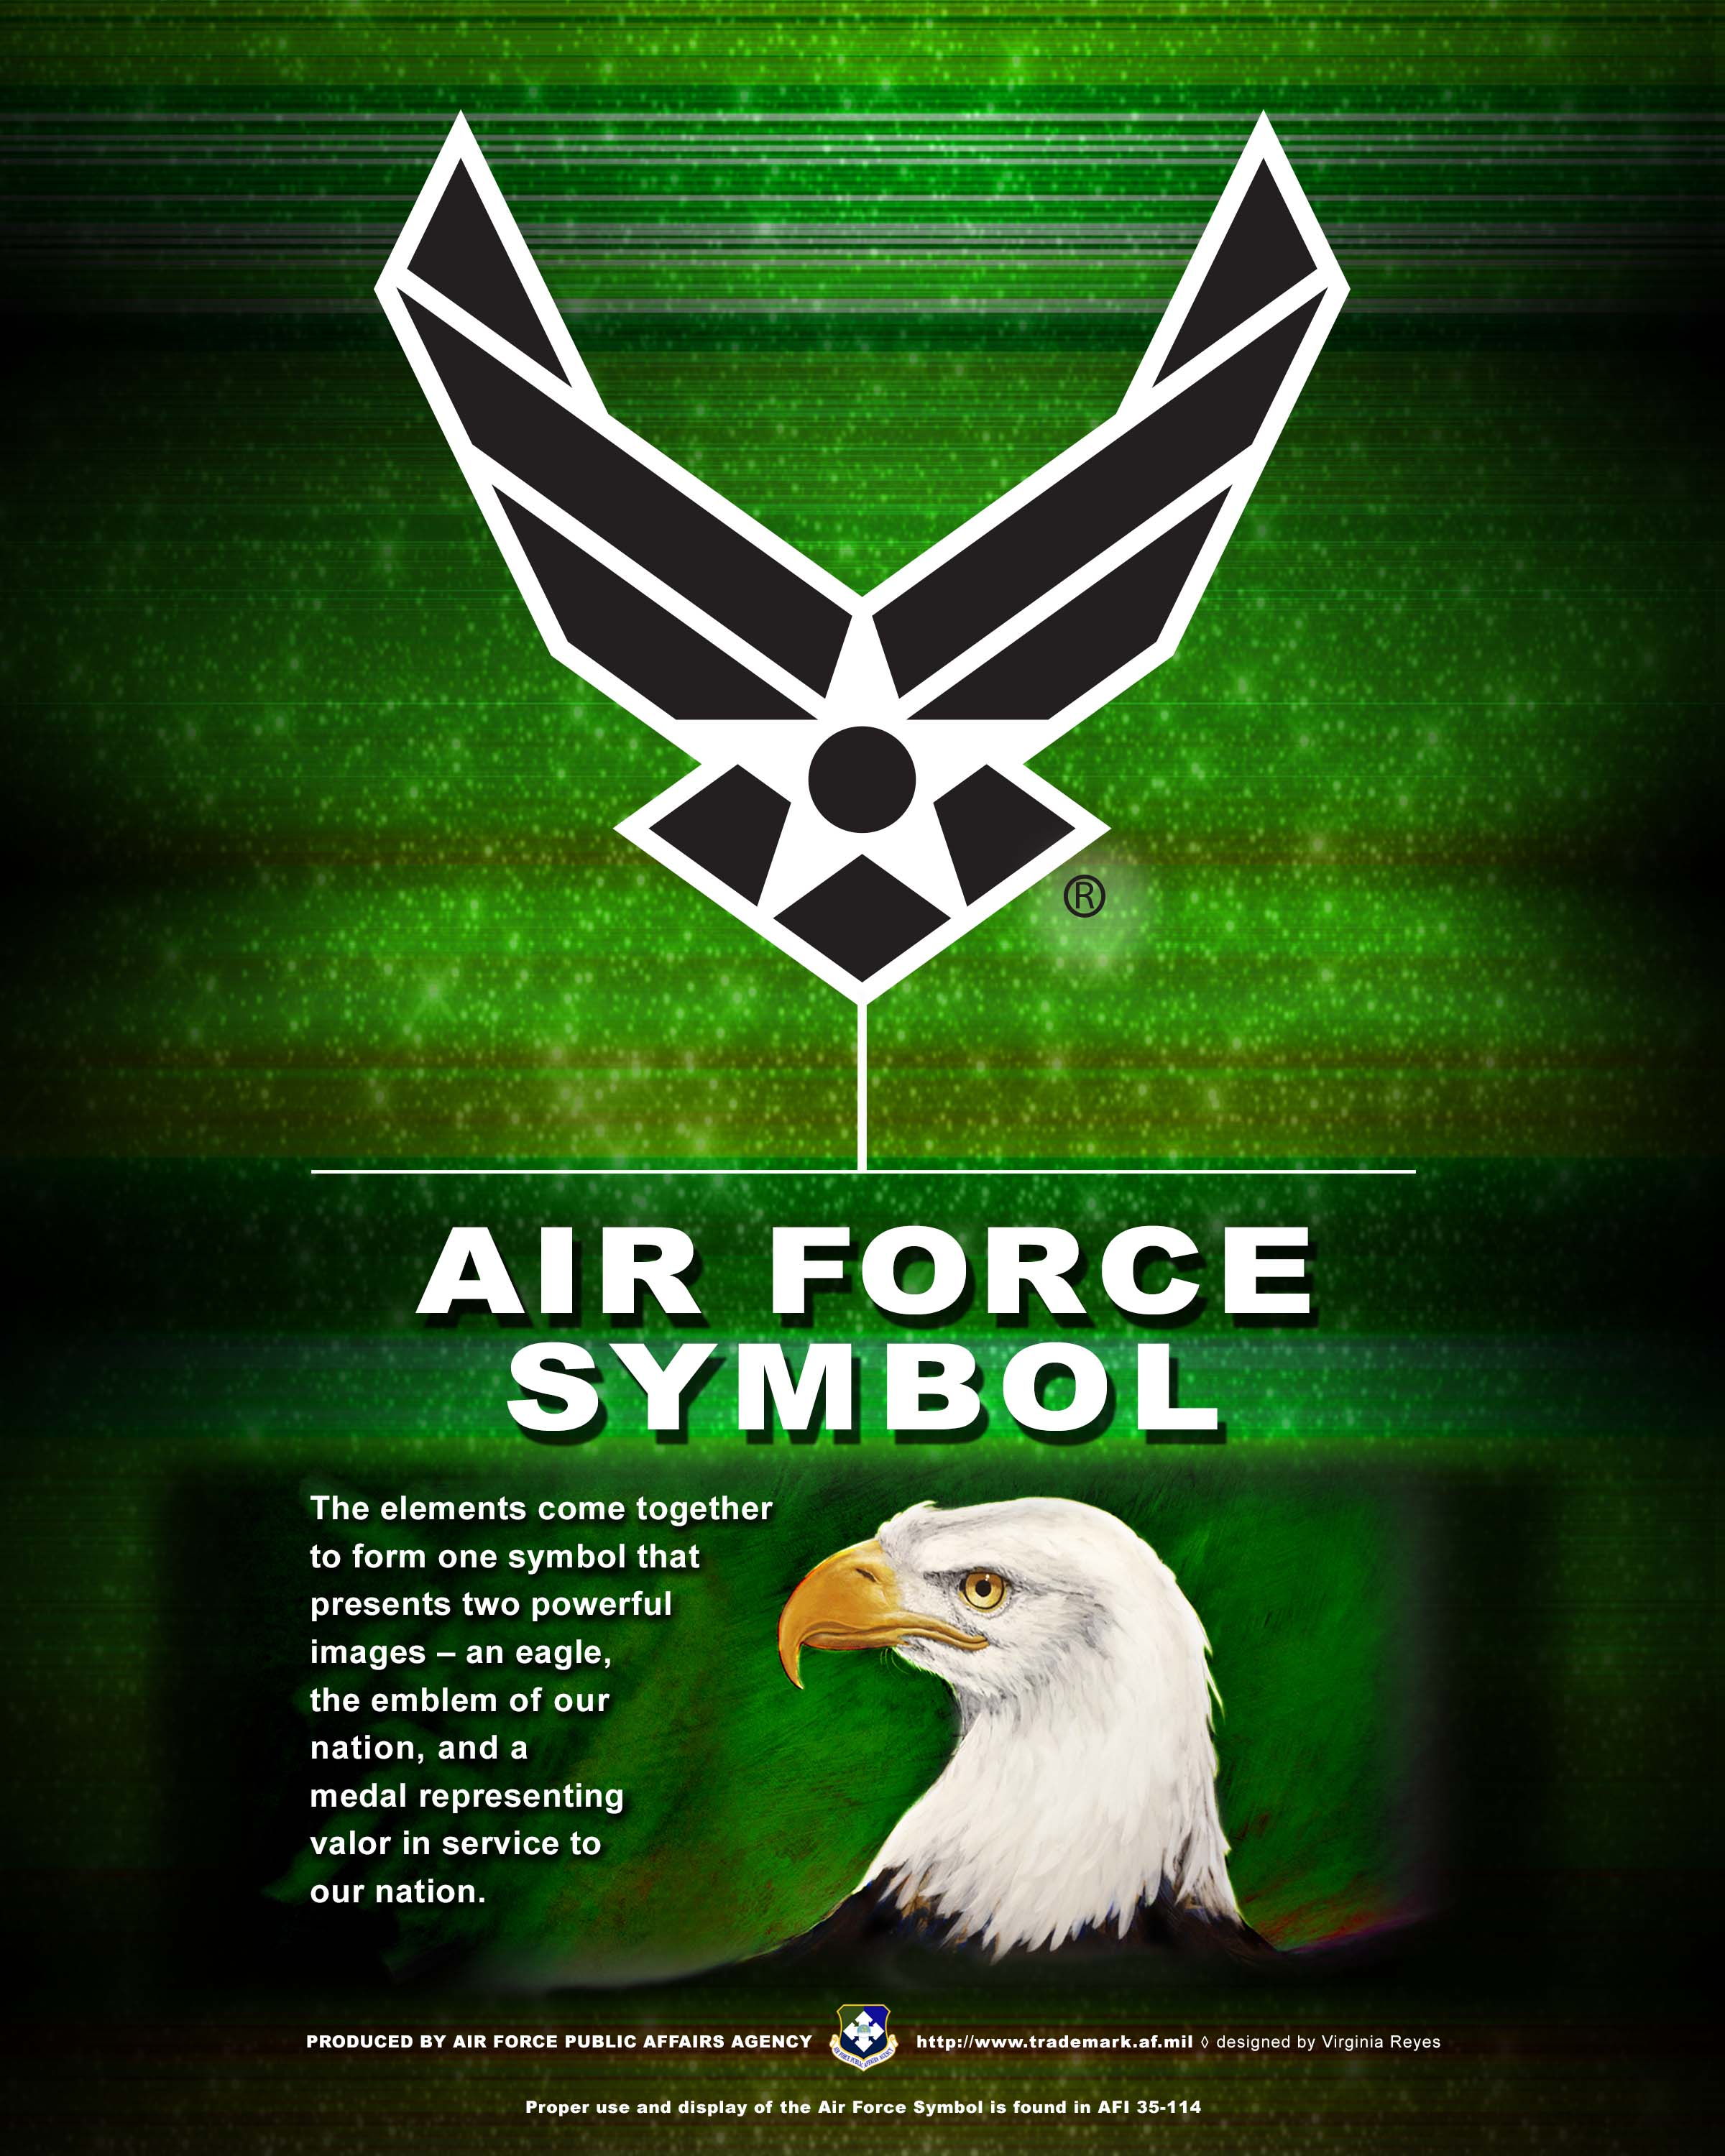 AF Branding & Trademark Licensing > About Us > The Air Force Symbol